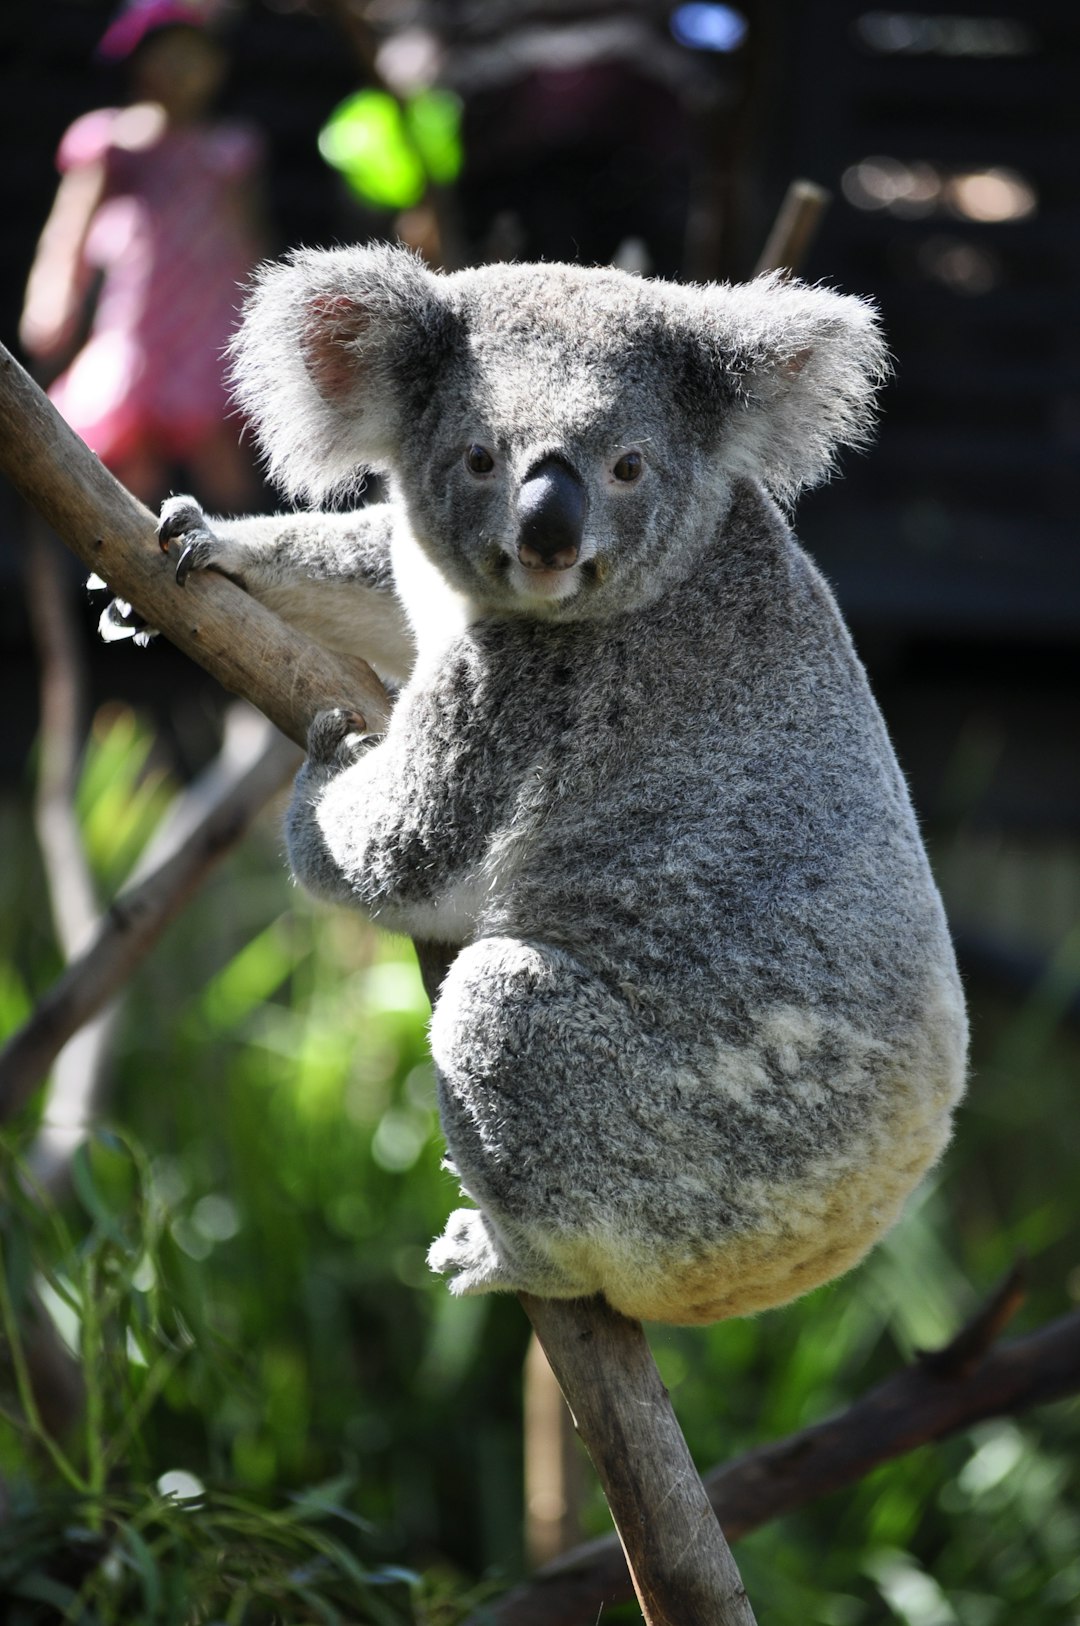  koala on tree branch during daytime koala